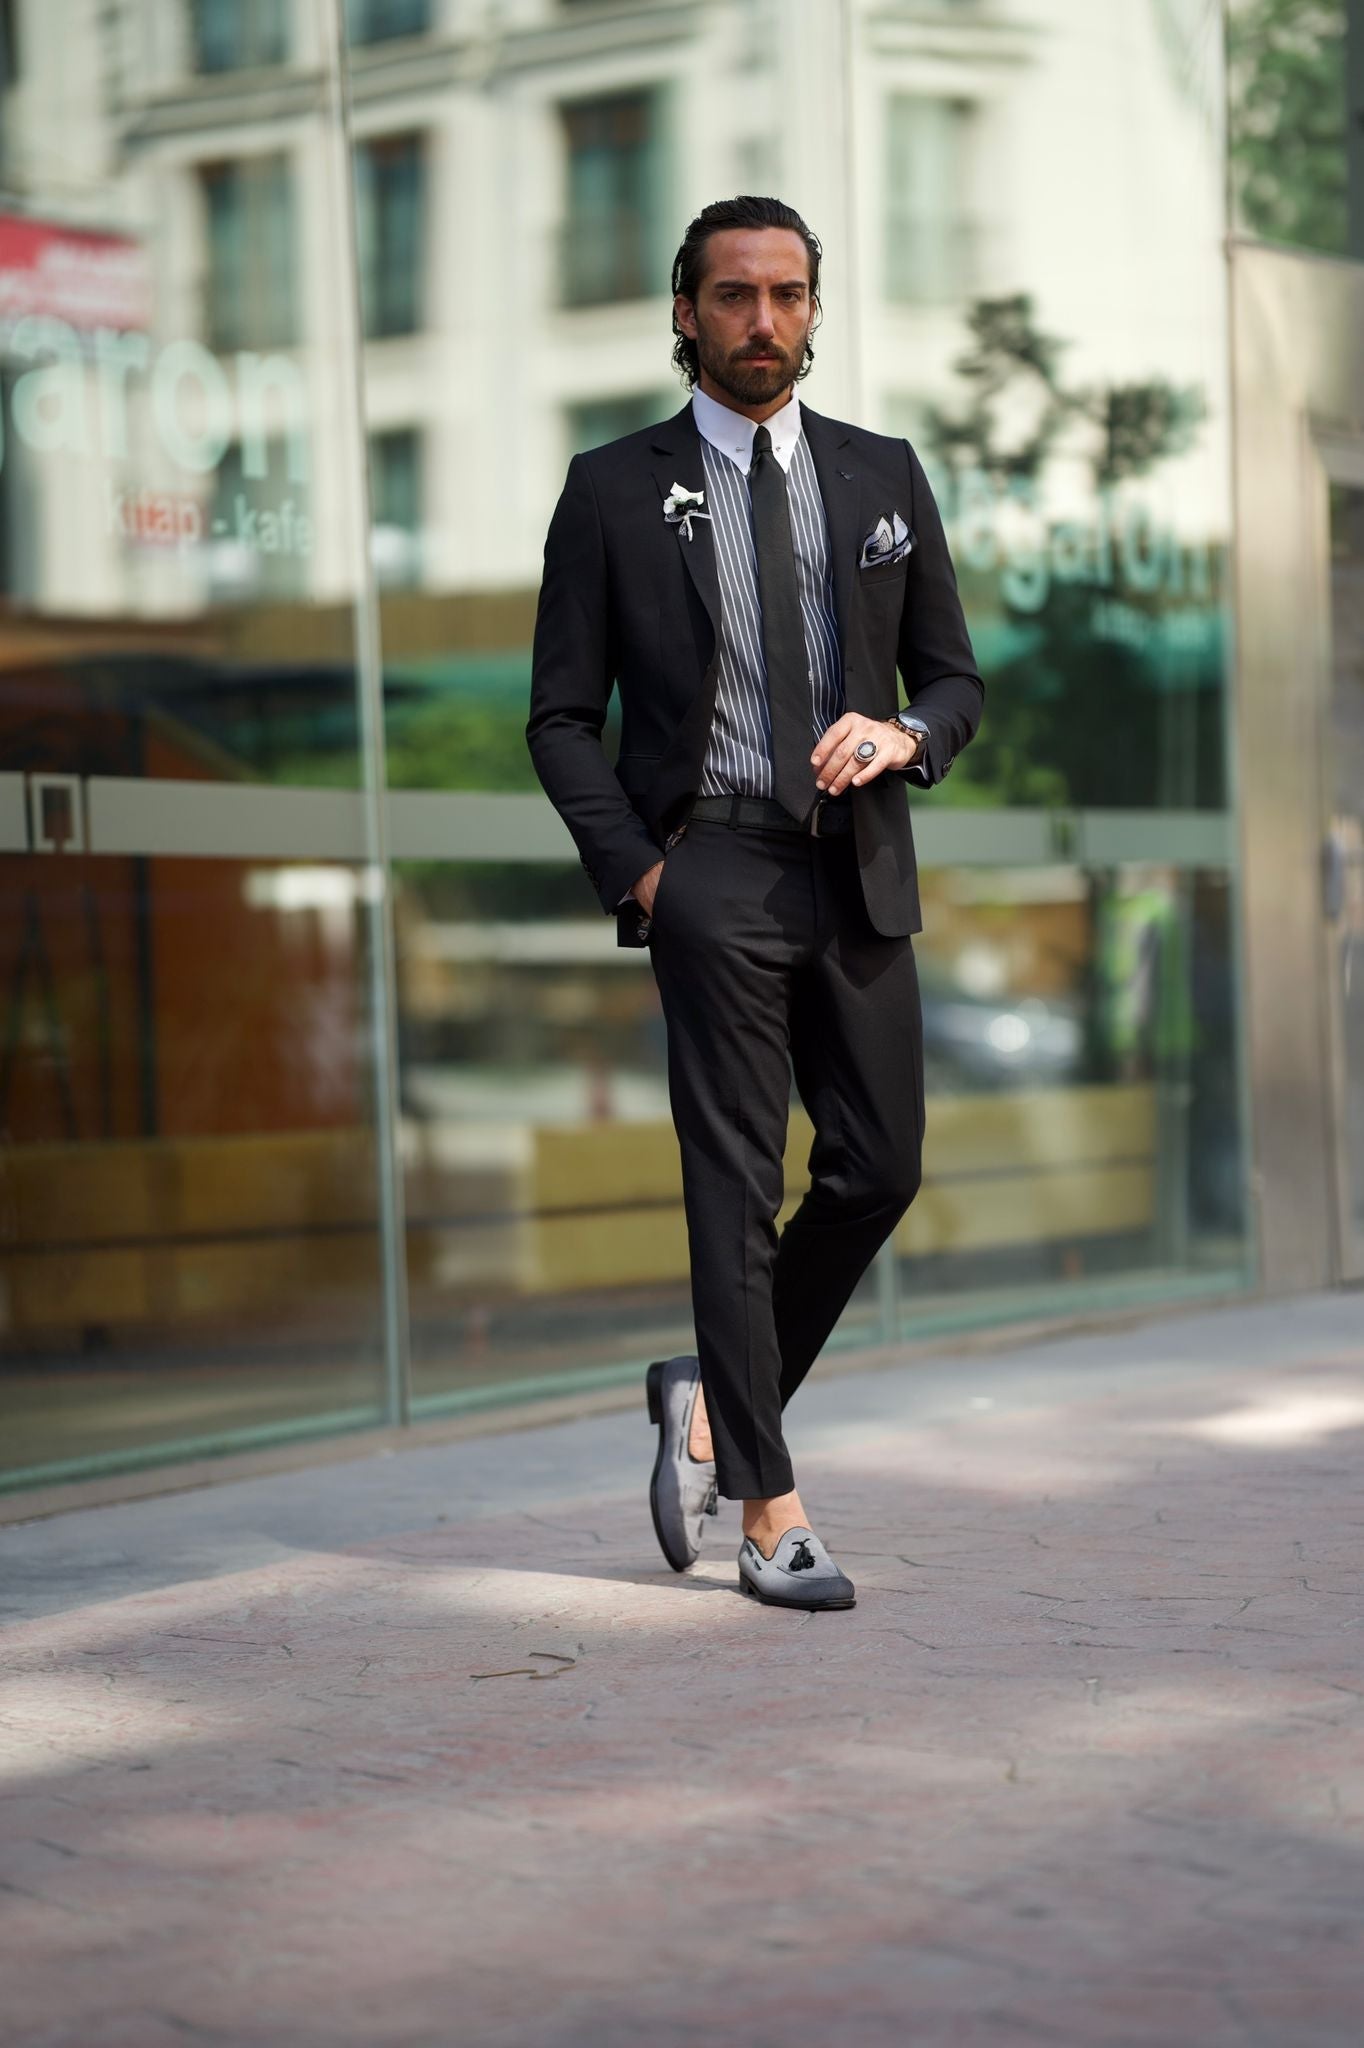 Bojoni Uluwatu Slim Fit Black Mono Collar Suit